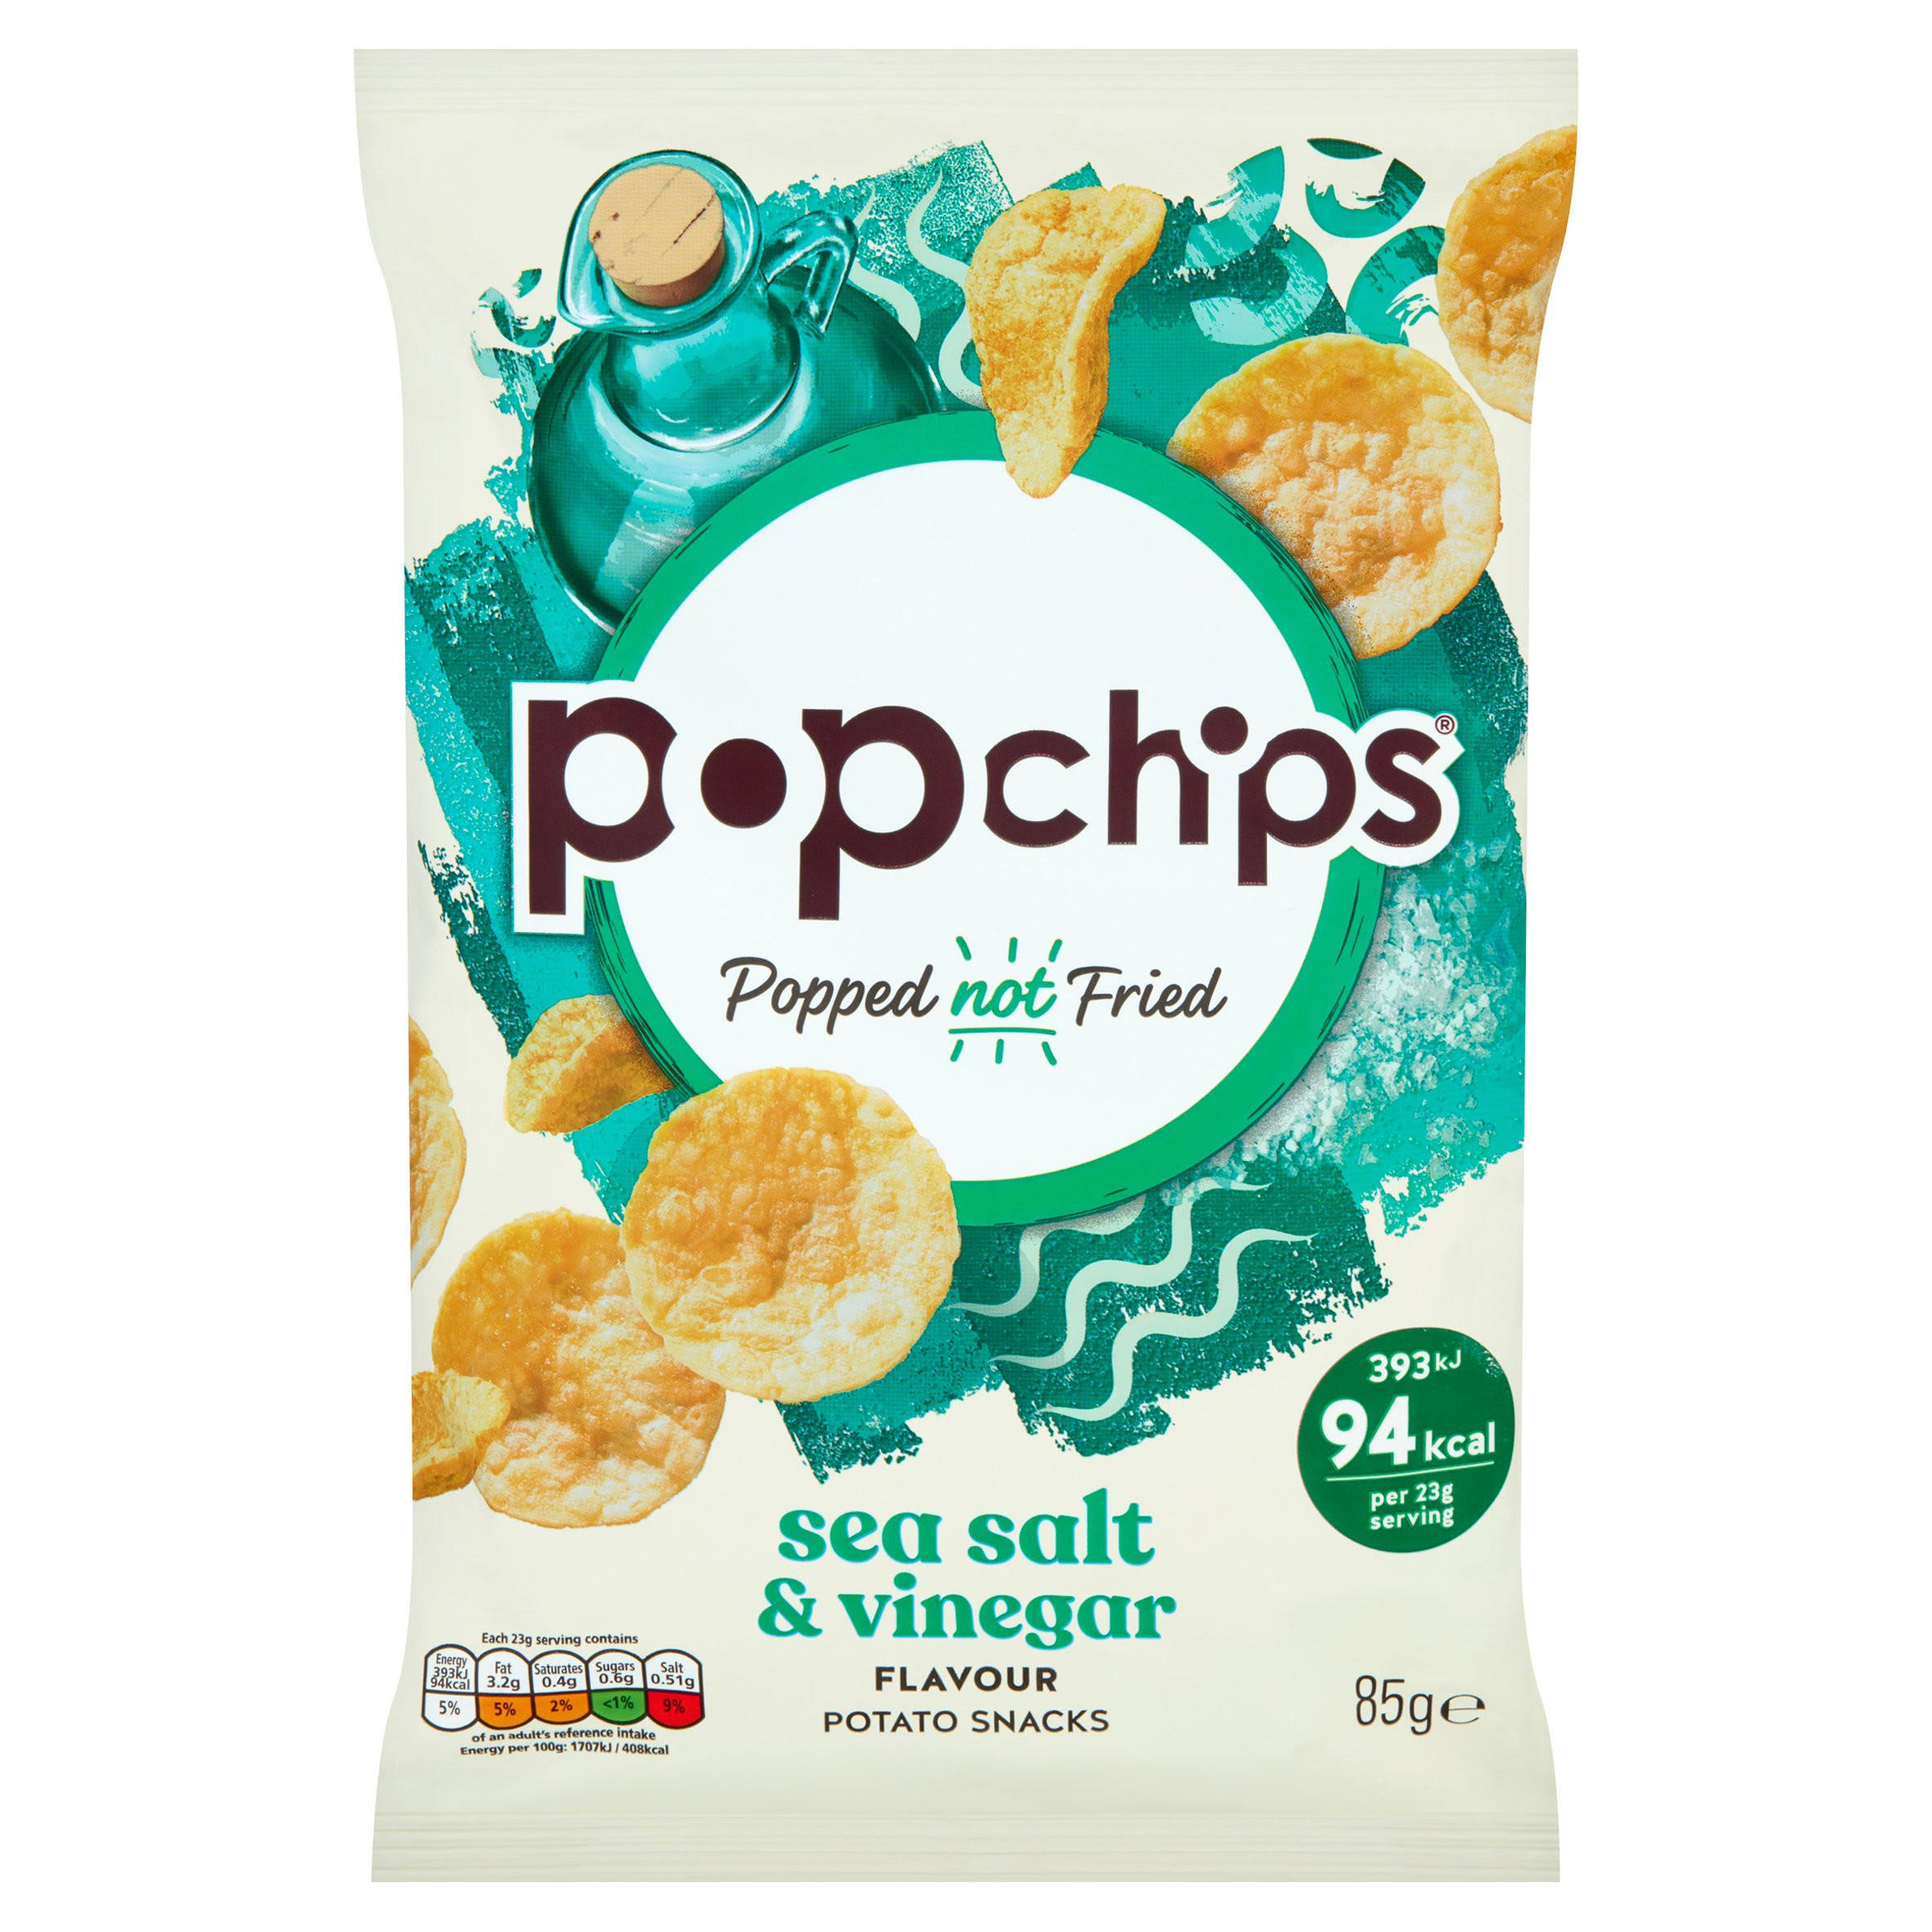 Popchips Chips - 85g, Sea Salt & Vinegar